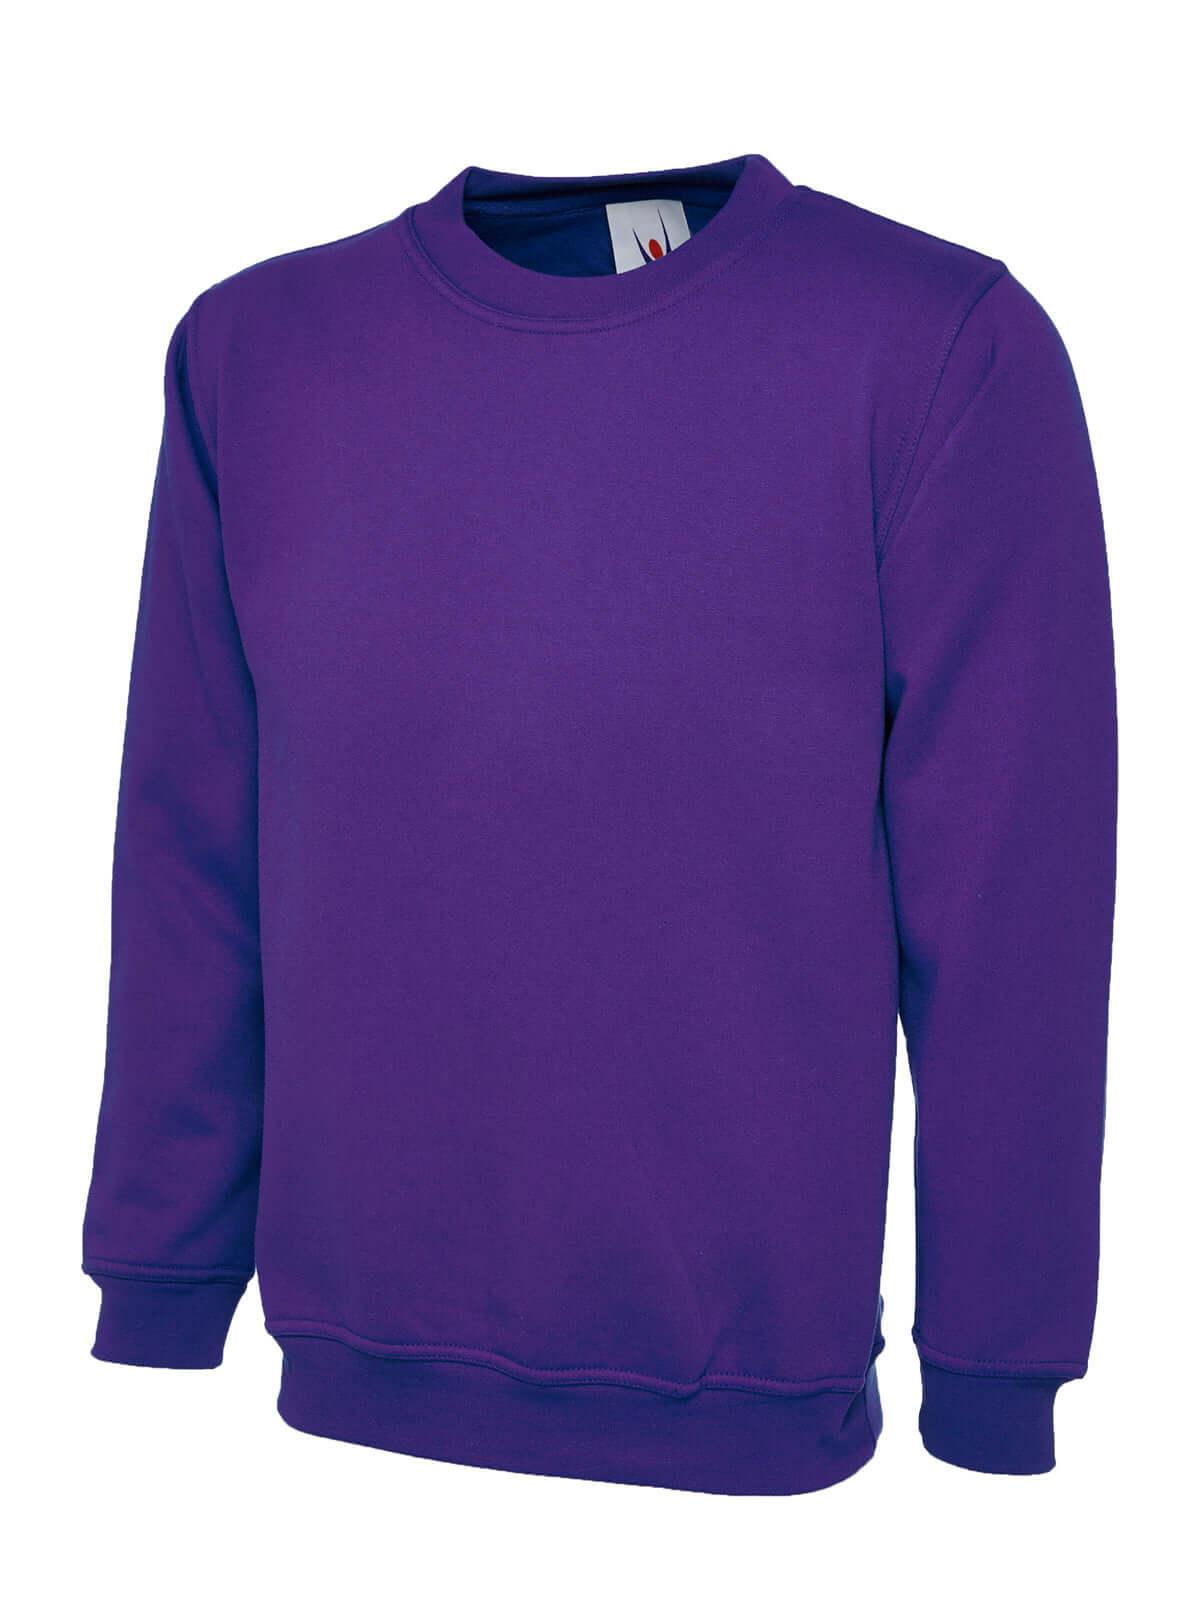 Pegasus Uniform Classic Sweatshirt - Purple